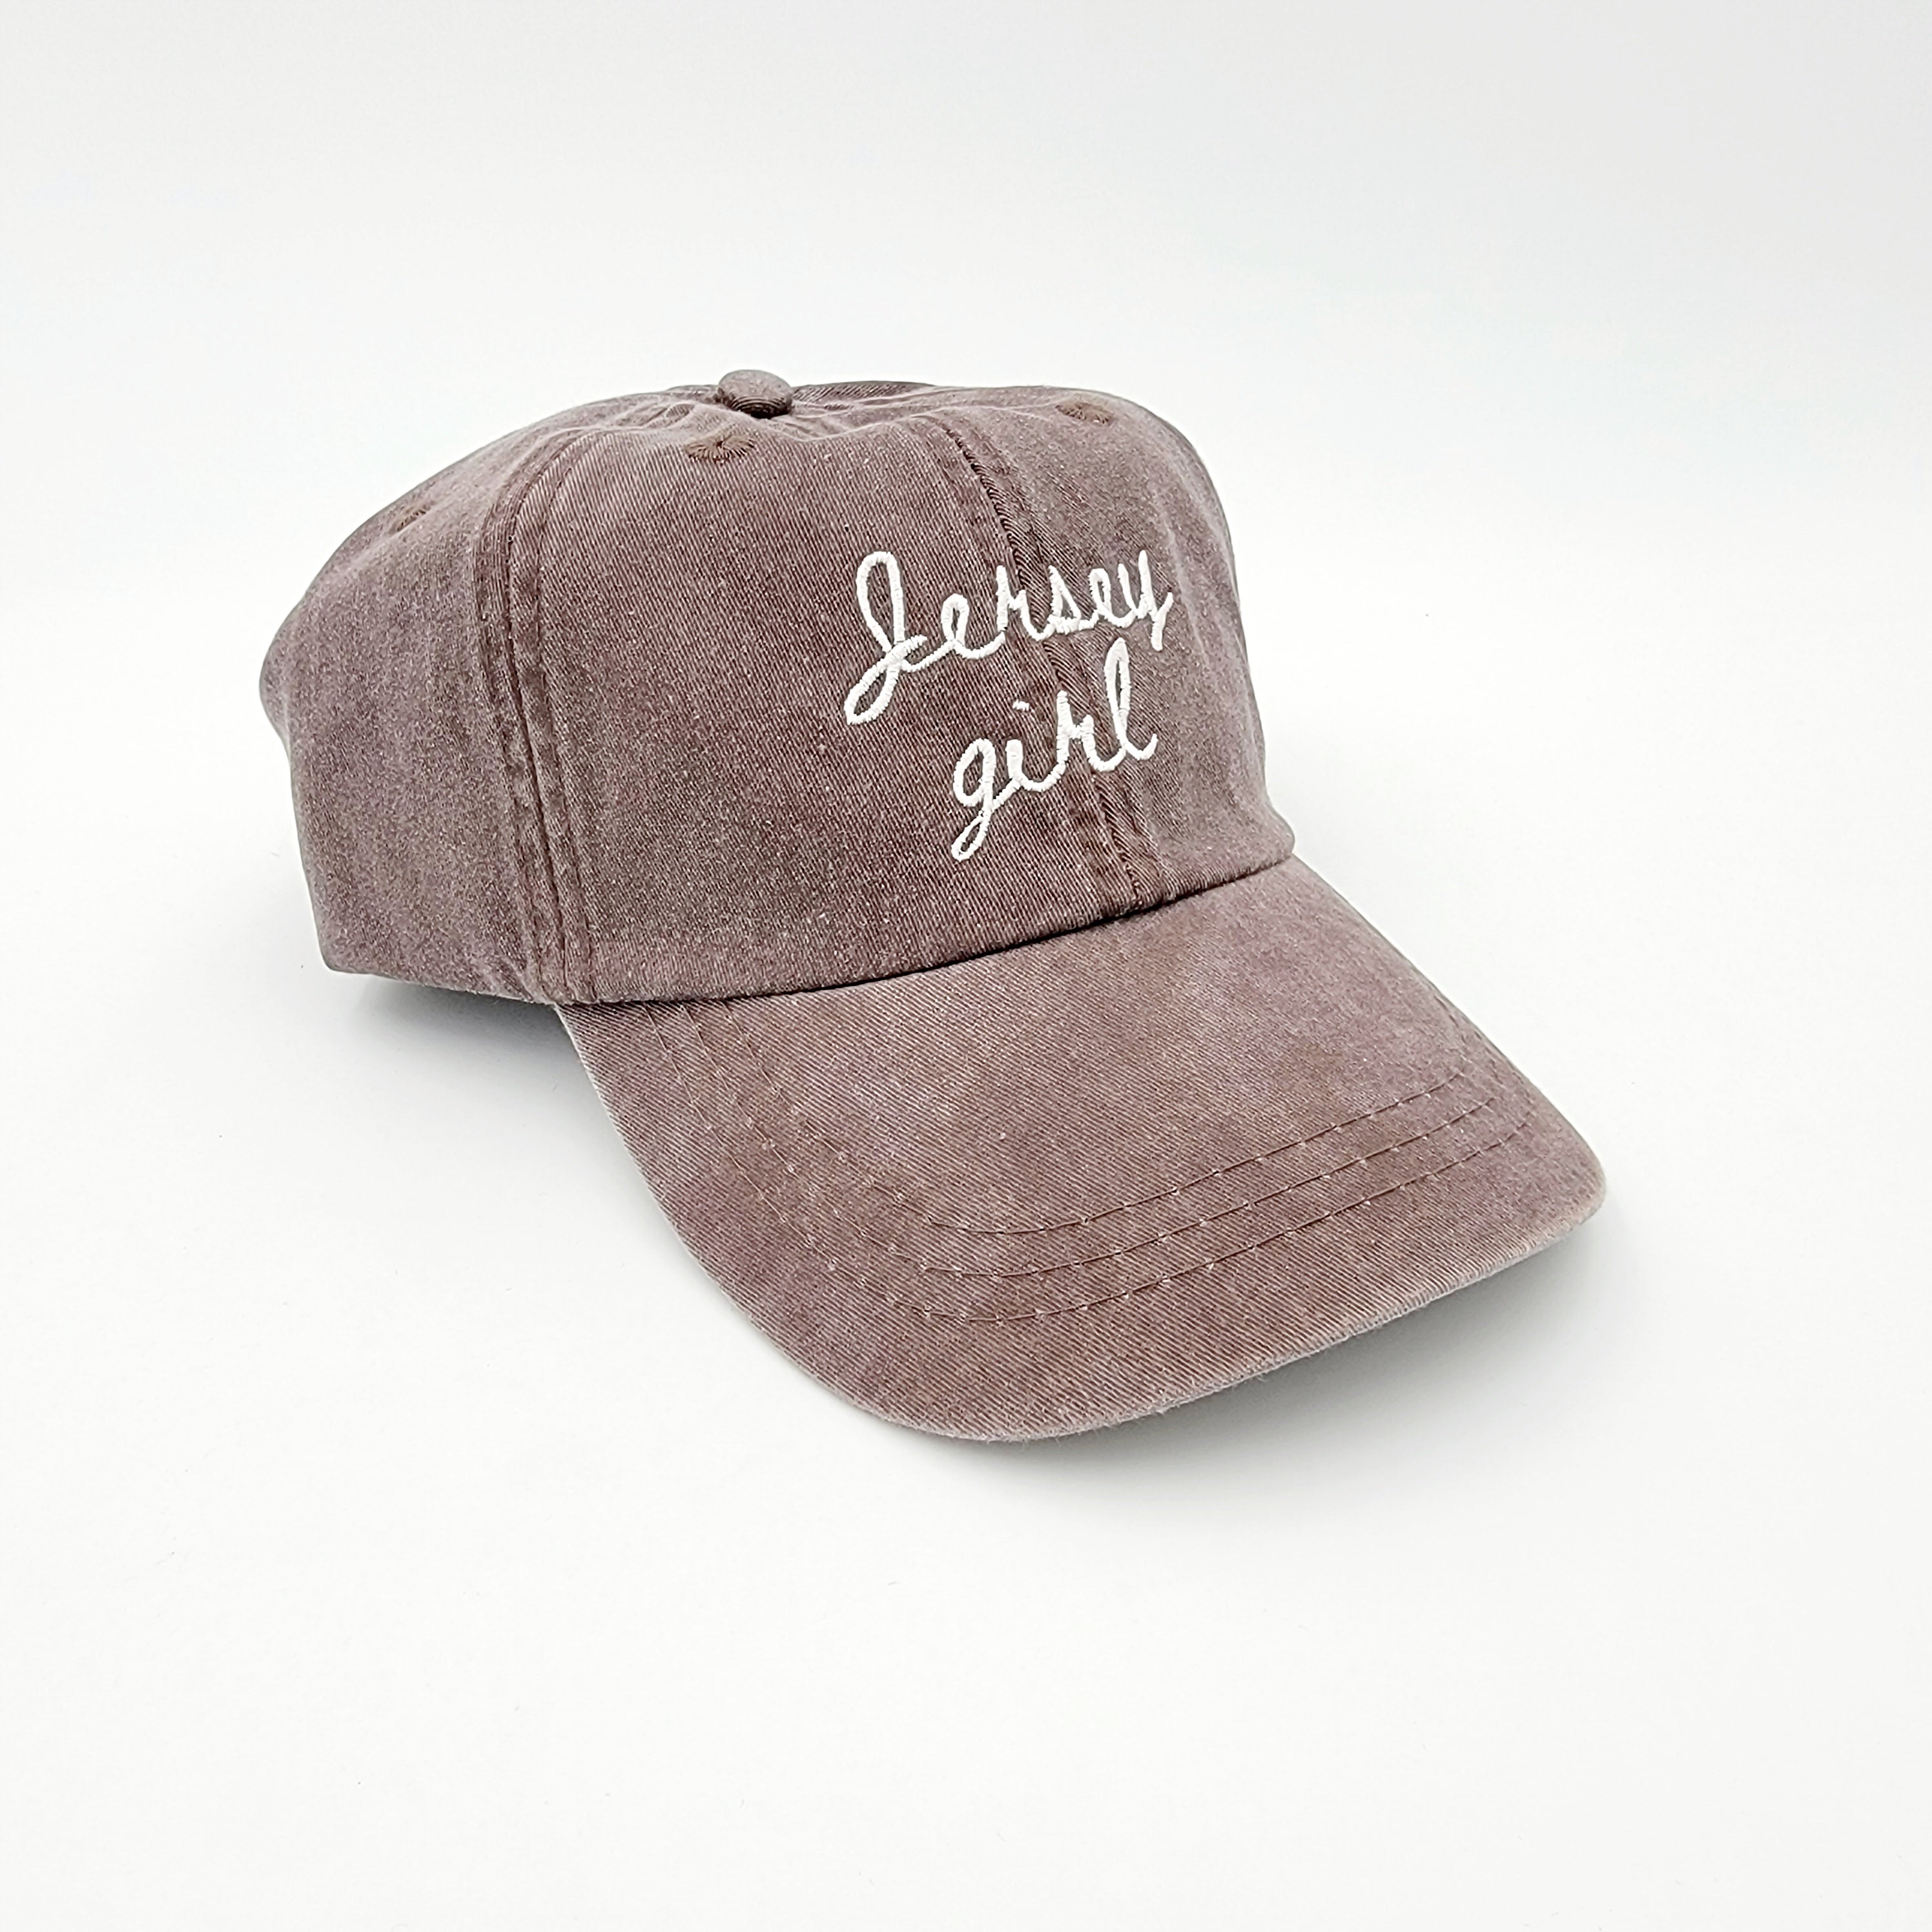 Jersey Girl Hat